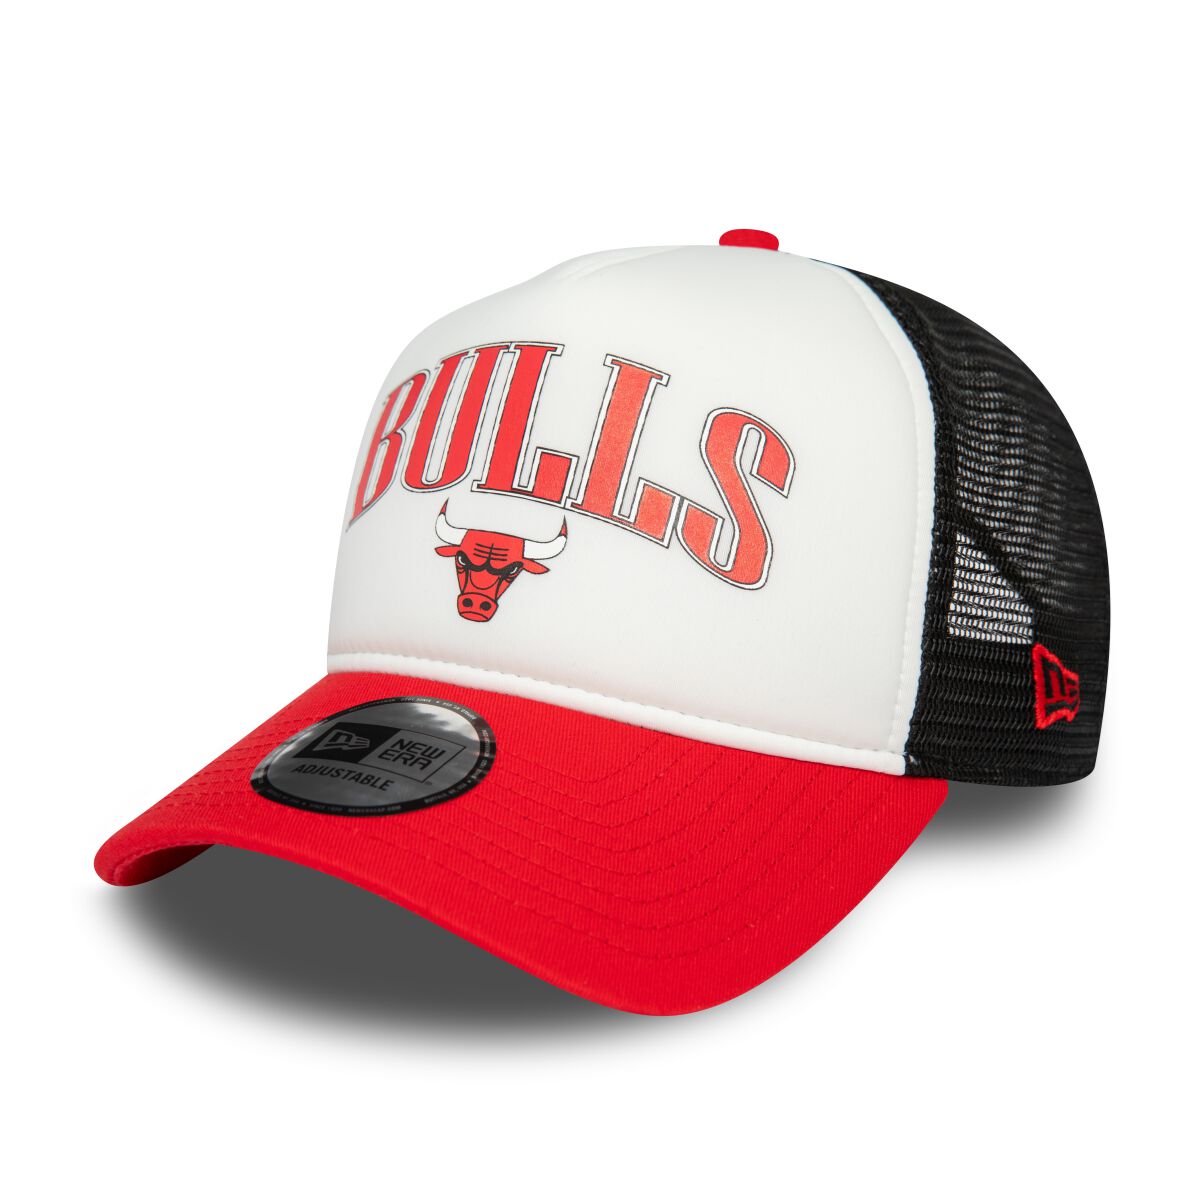 New Era - NBA Cap - Retro Trucker 9FORTY - Chicago Bulls - multicolor von New Era - NBA